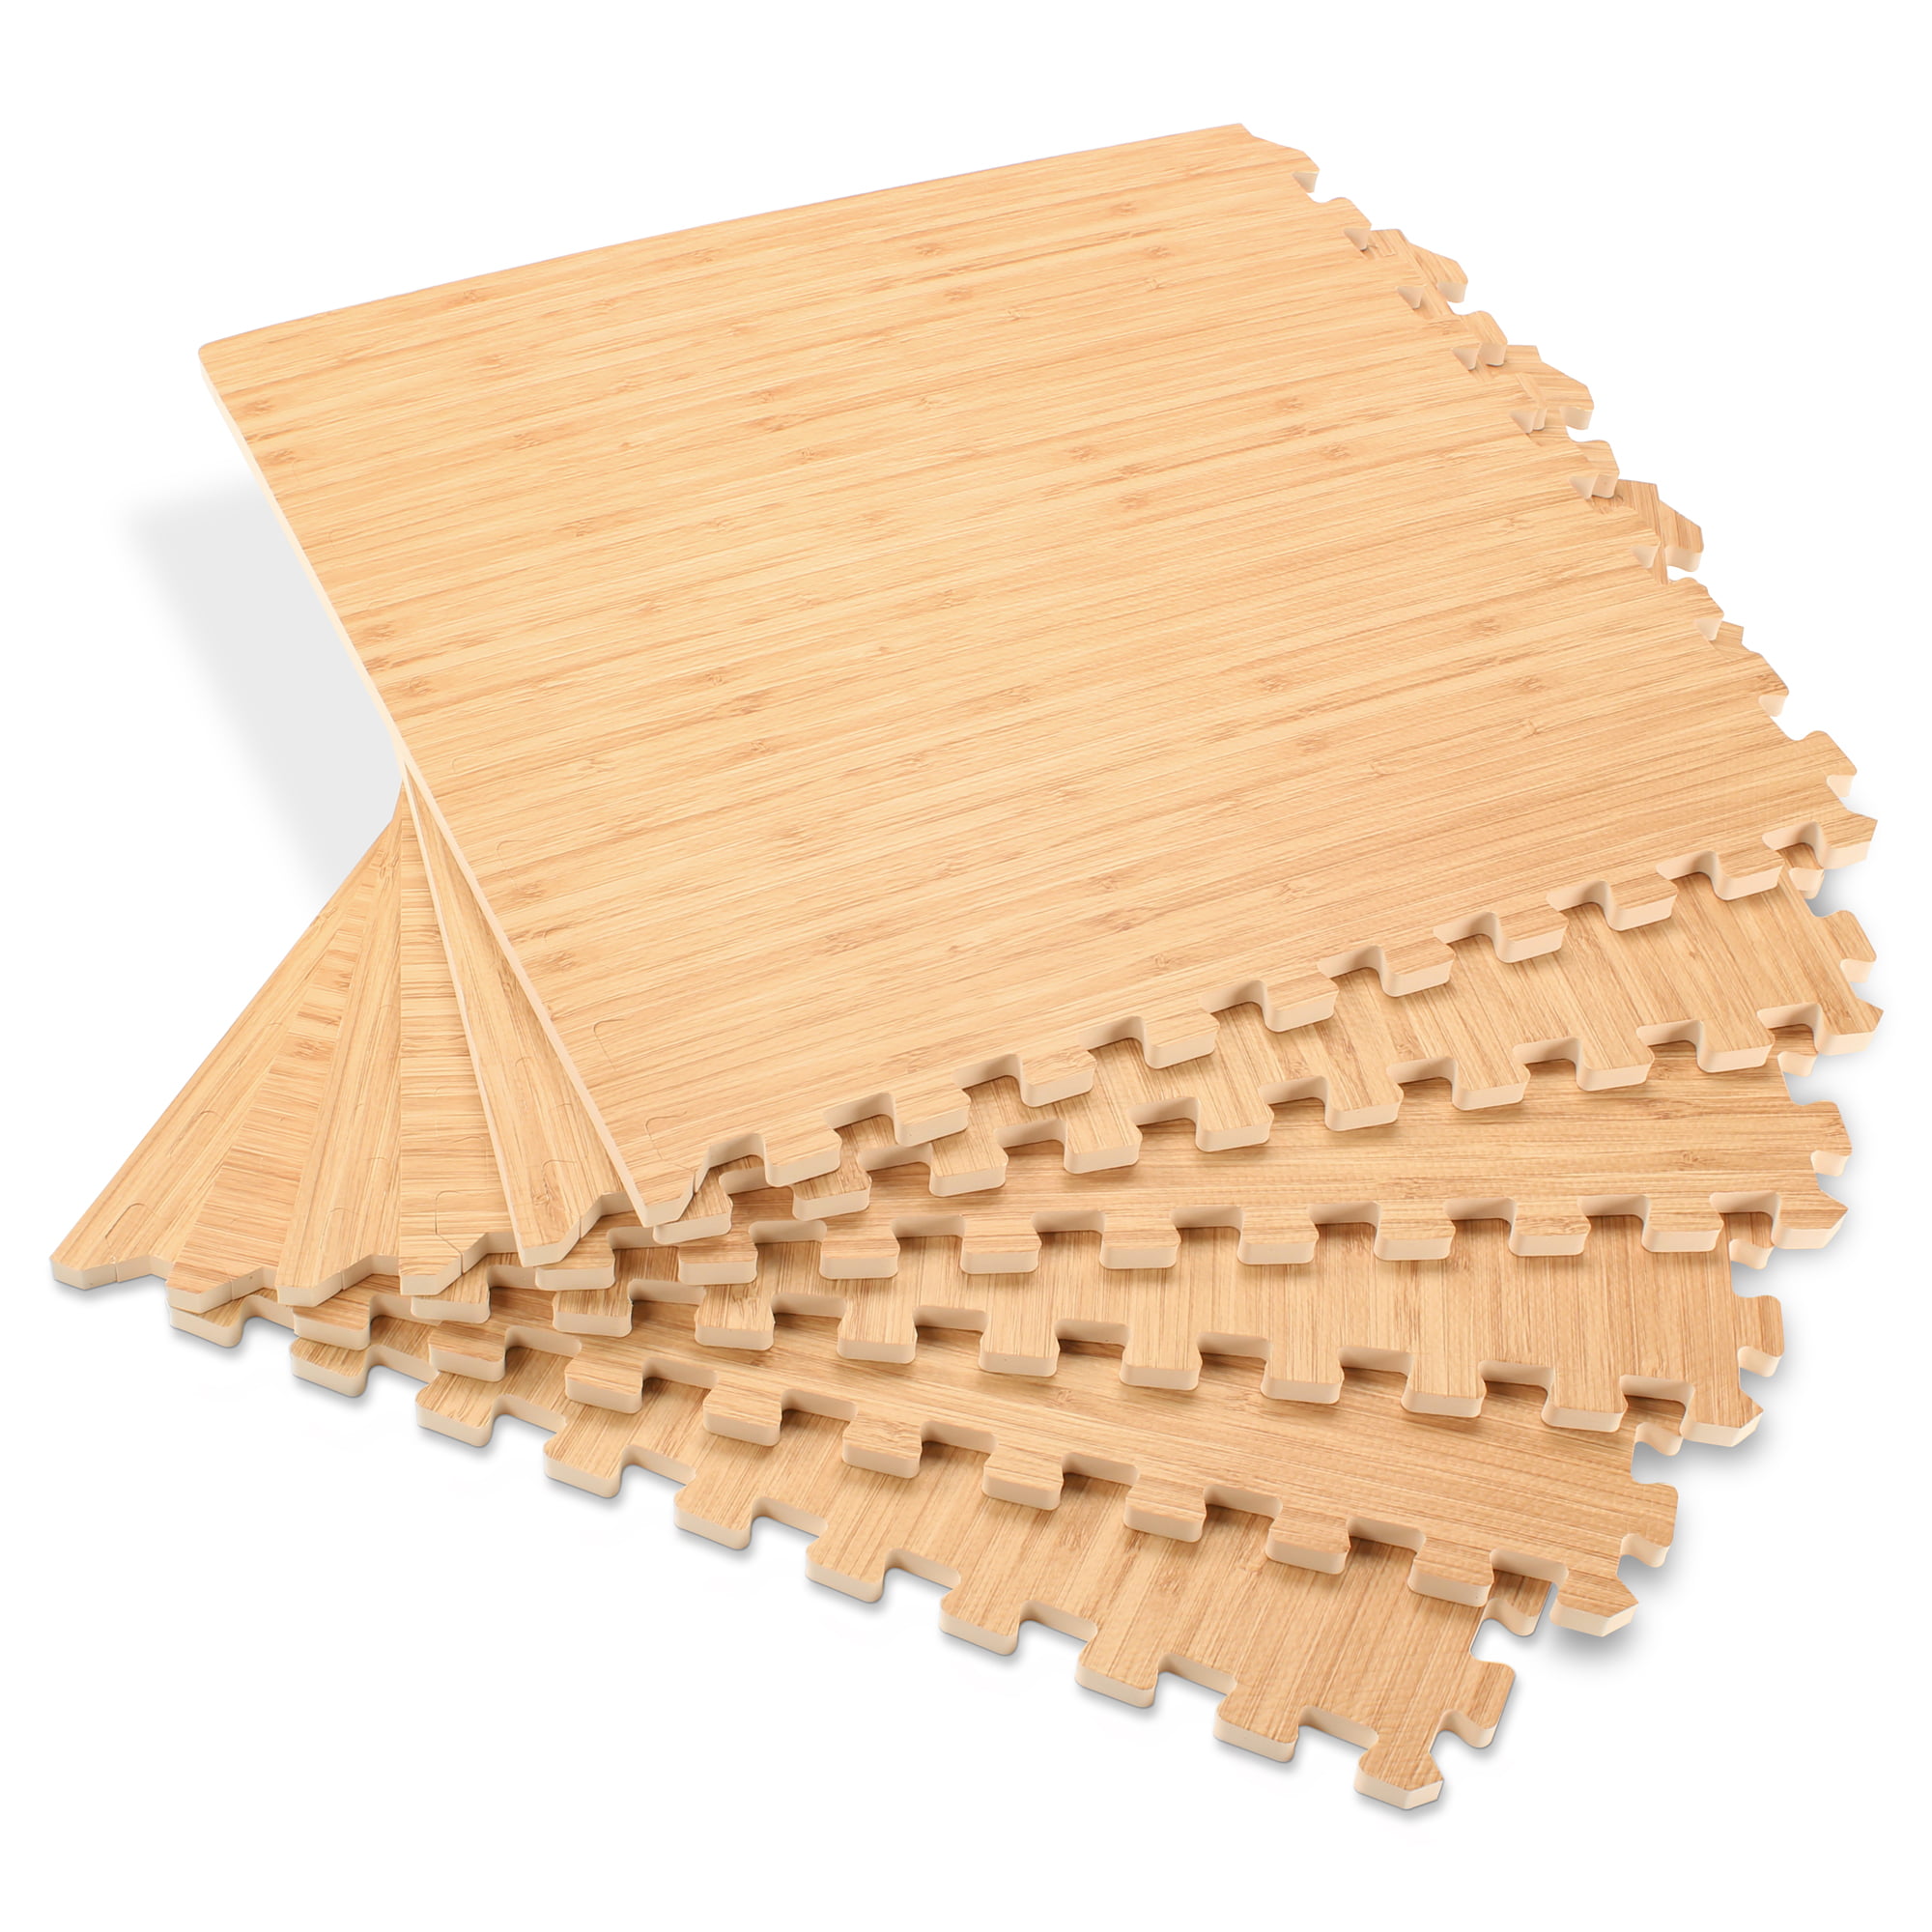 We Sell Mats Forest Floor Grain Interlocking Foam Anti Fatigue Flooring 2x2 Tiles Light Bamboo